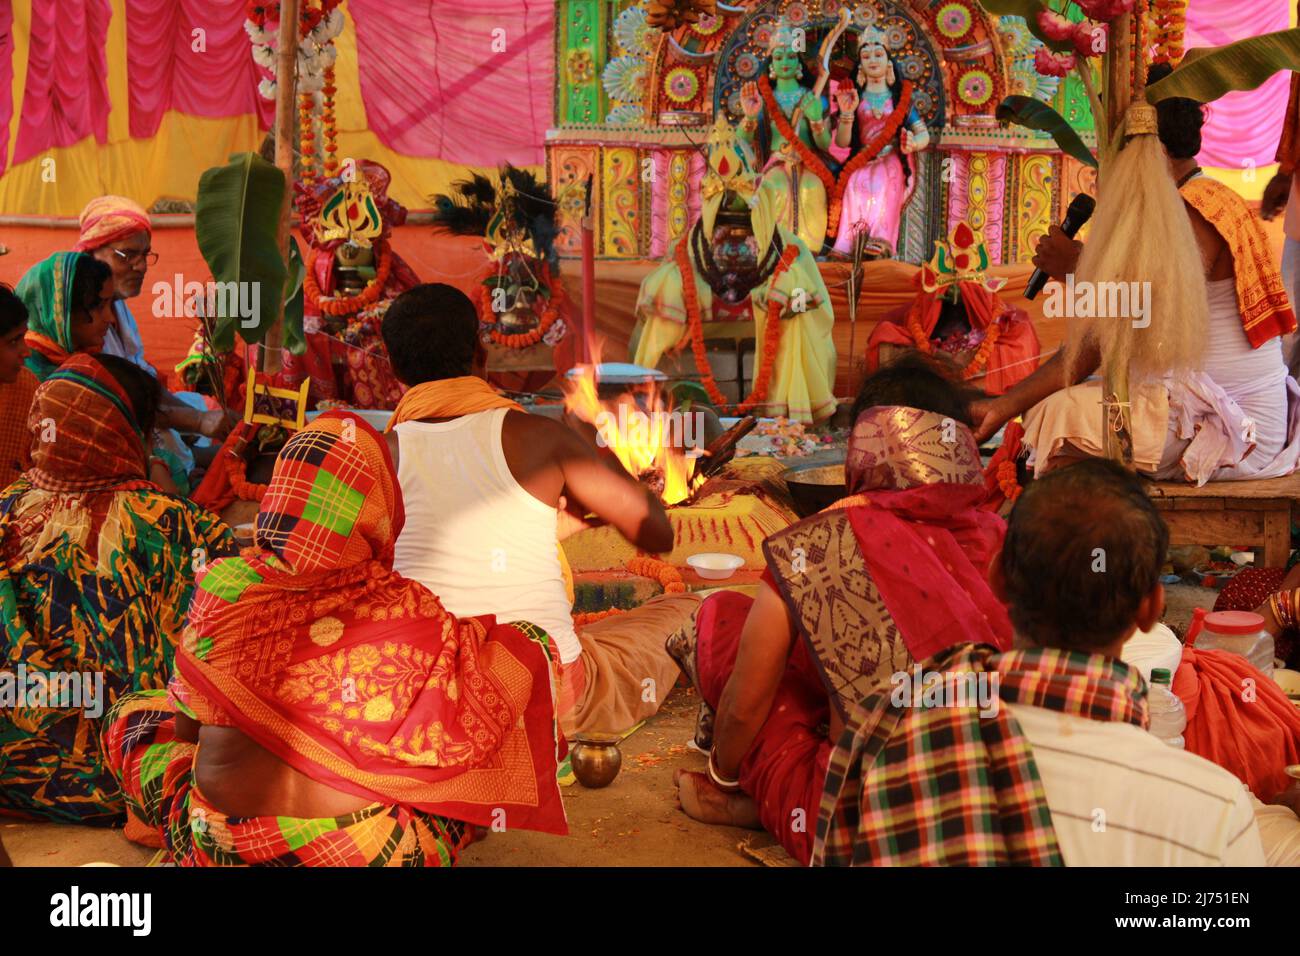 13 April 2022: Havan Yagya Fire Ceremony by Several people On the Occasion of Hanuman Jayanti at Bhadrak, Odisha, India Stock Photo